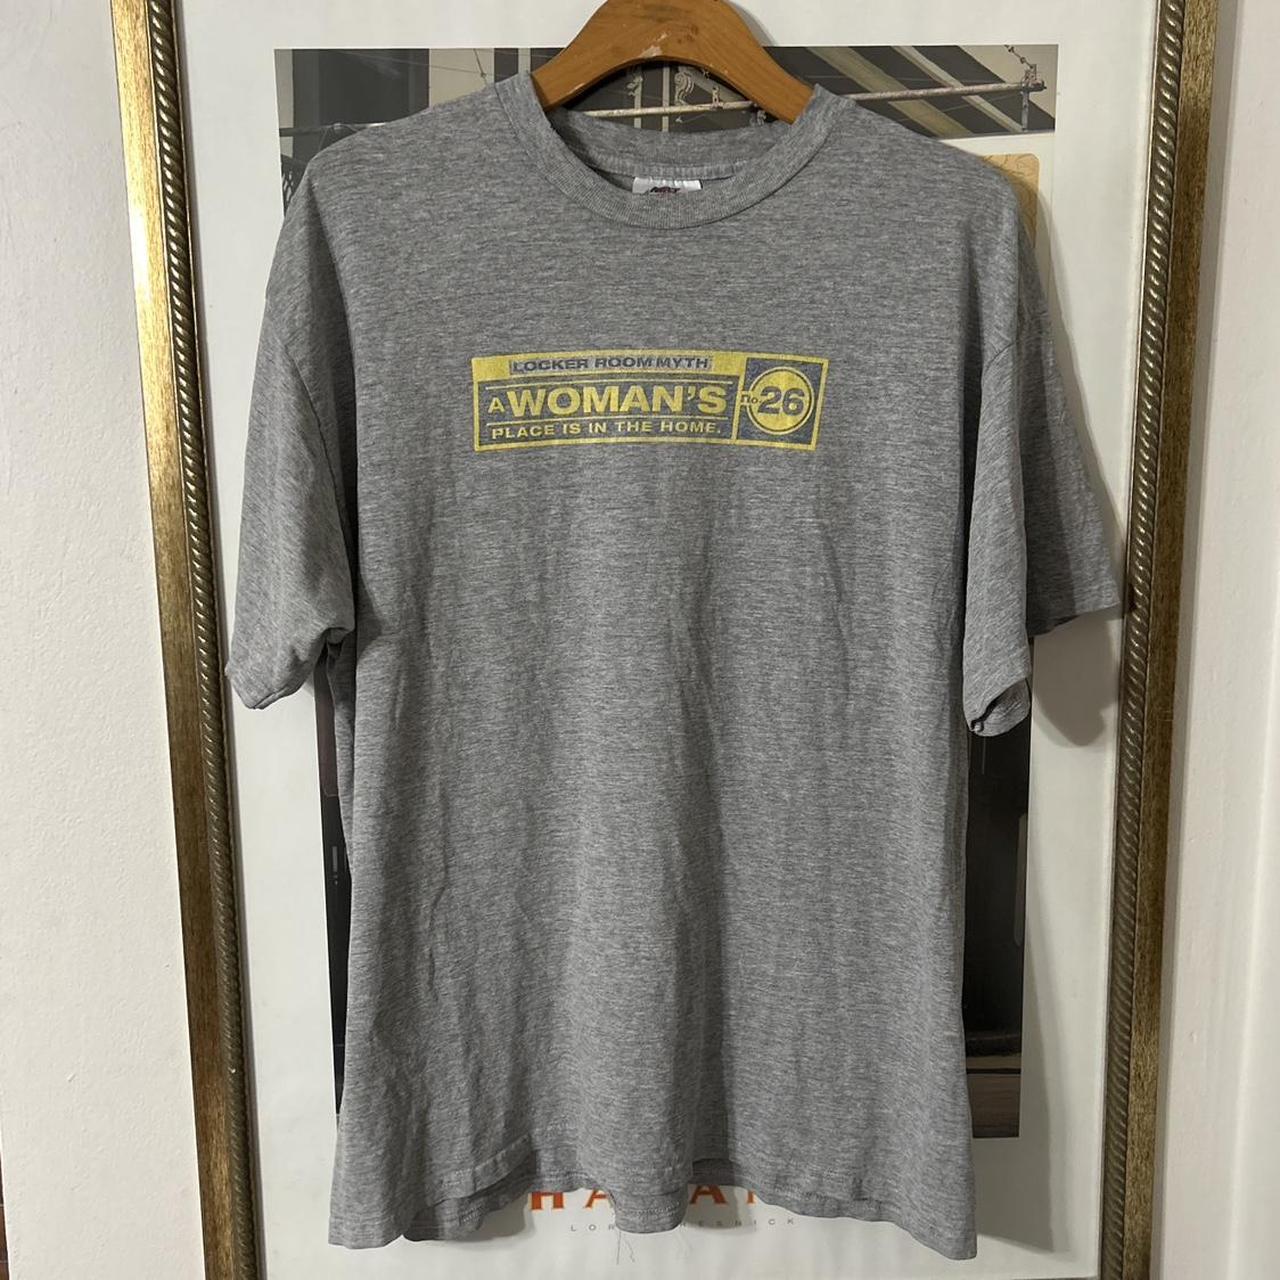 Nike Men's Grey T-shirt